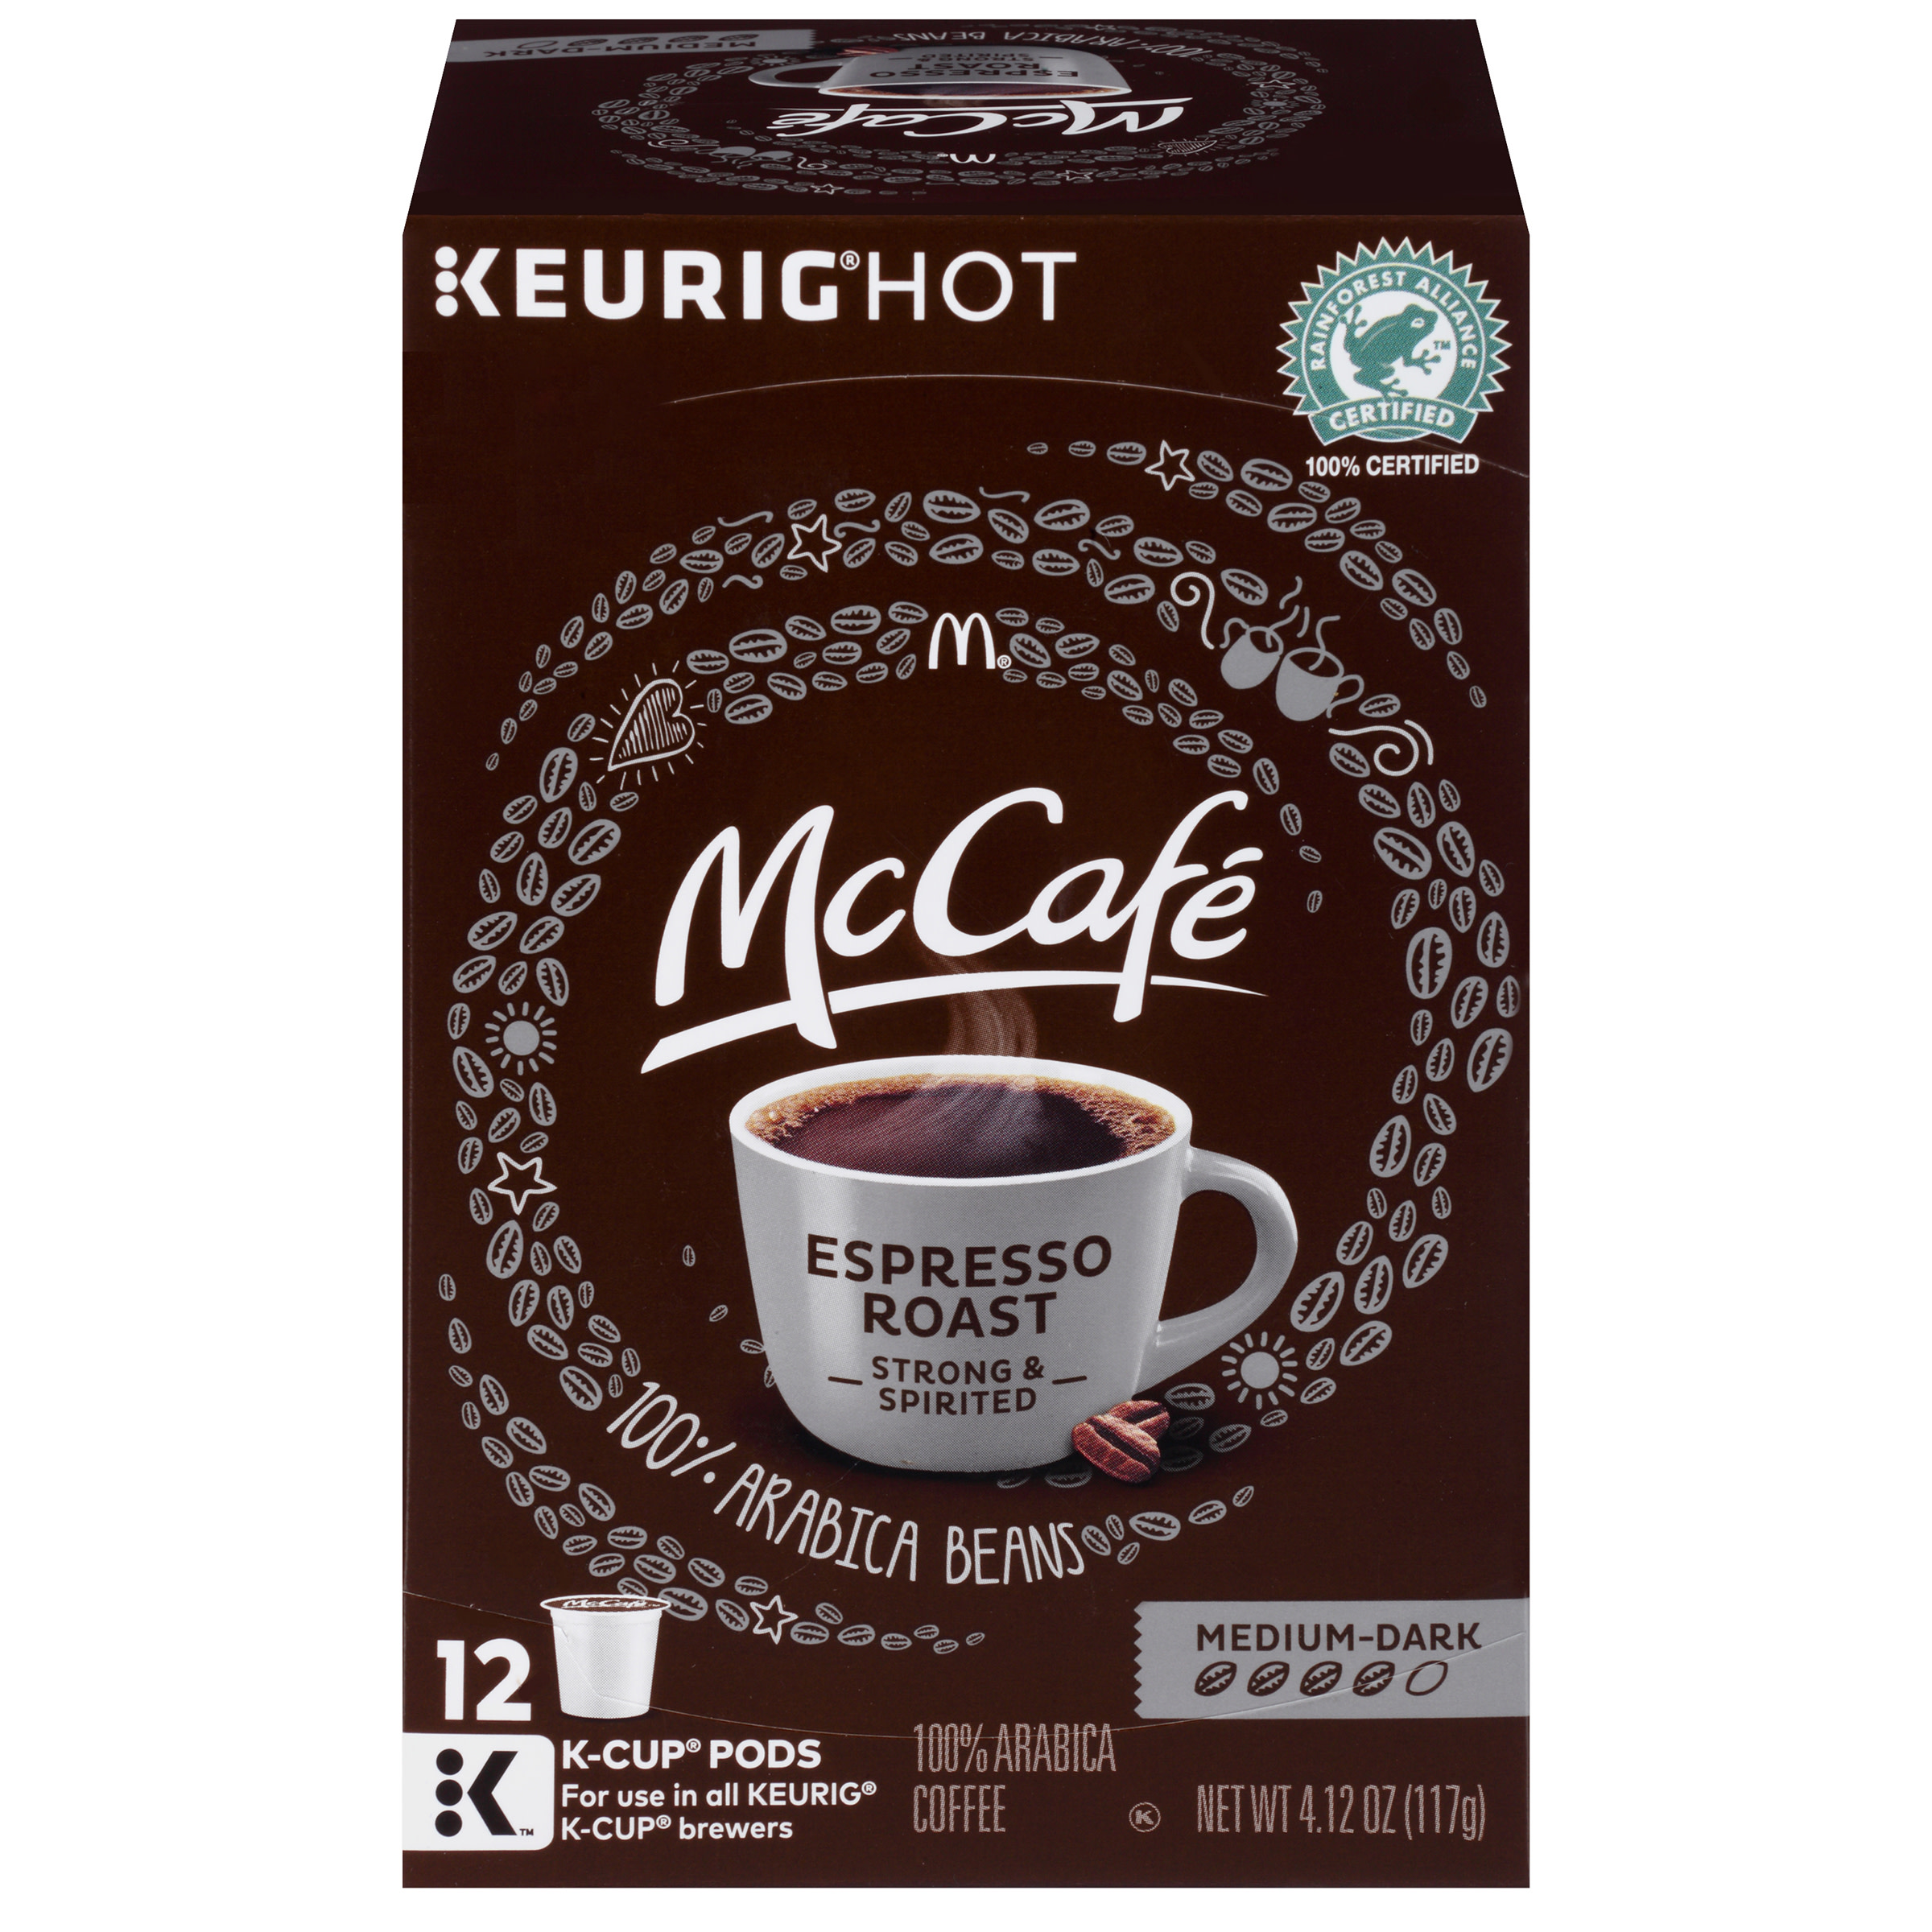 McCafe Medium-Dark Espresso Roast Coffee K-Cup Pods, Caffeinated, 12 ct - 4.12 oz Box - image 1 of 7